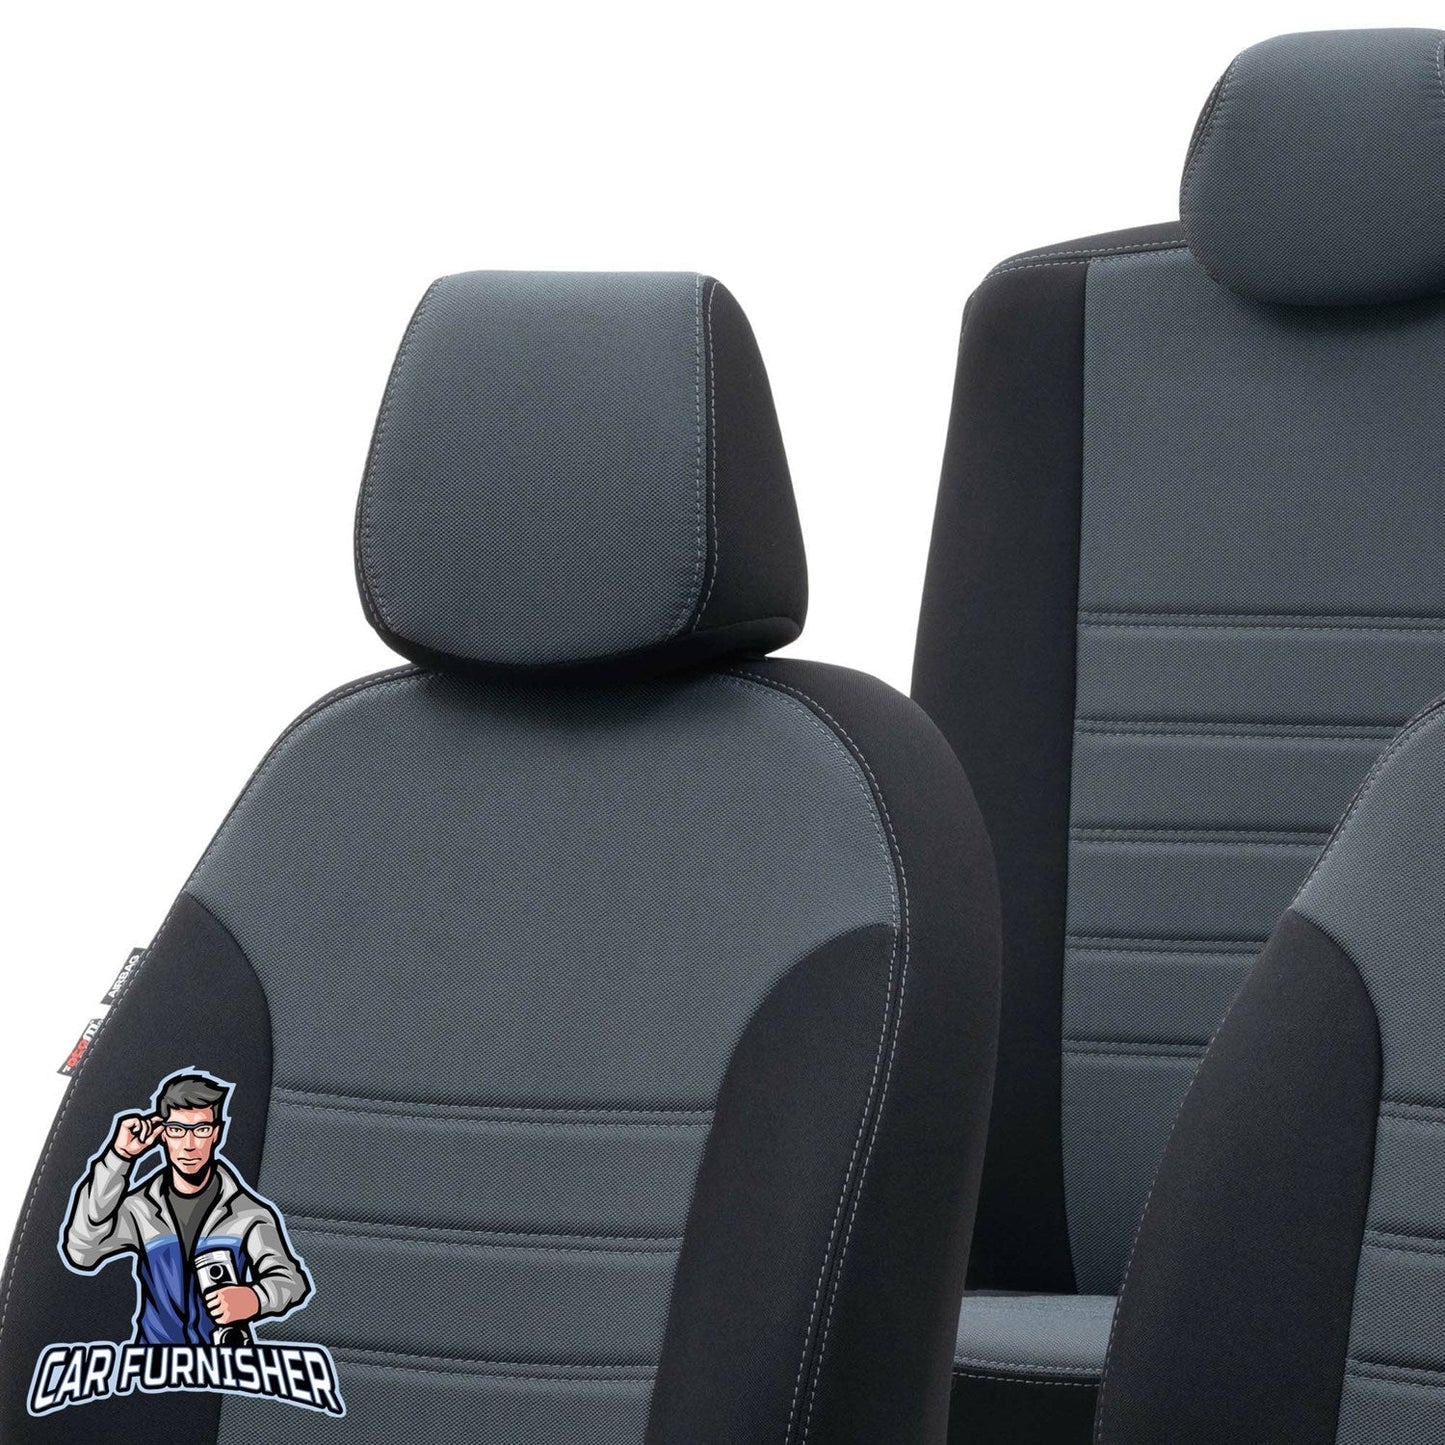 Ssangyong Actyon Seat Covers Original Jacquard Design Smoked Black Jacquard Fabric